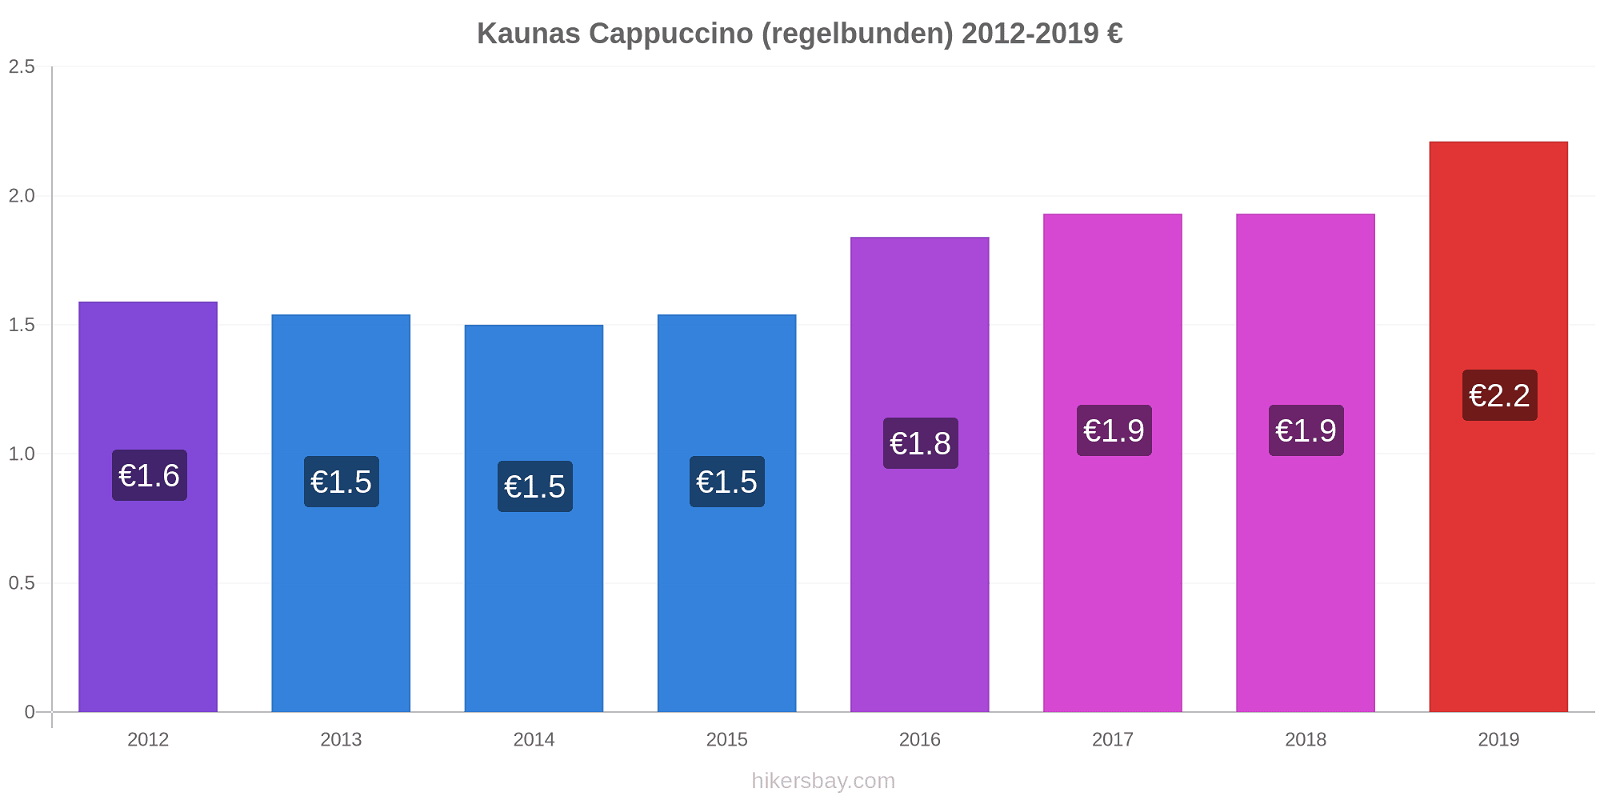 Kaunas prisförändringar Cappuccino (regelbunden) hikersbay.com